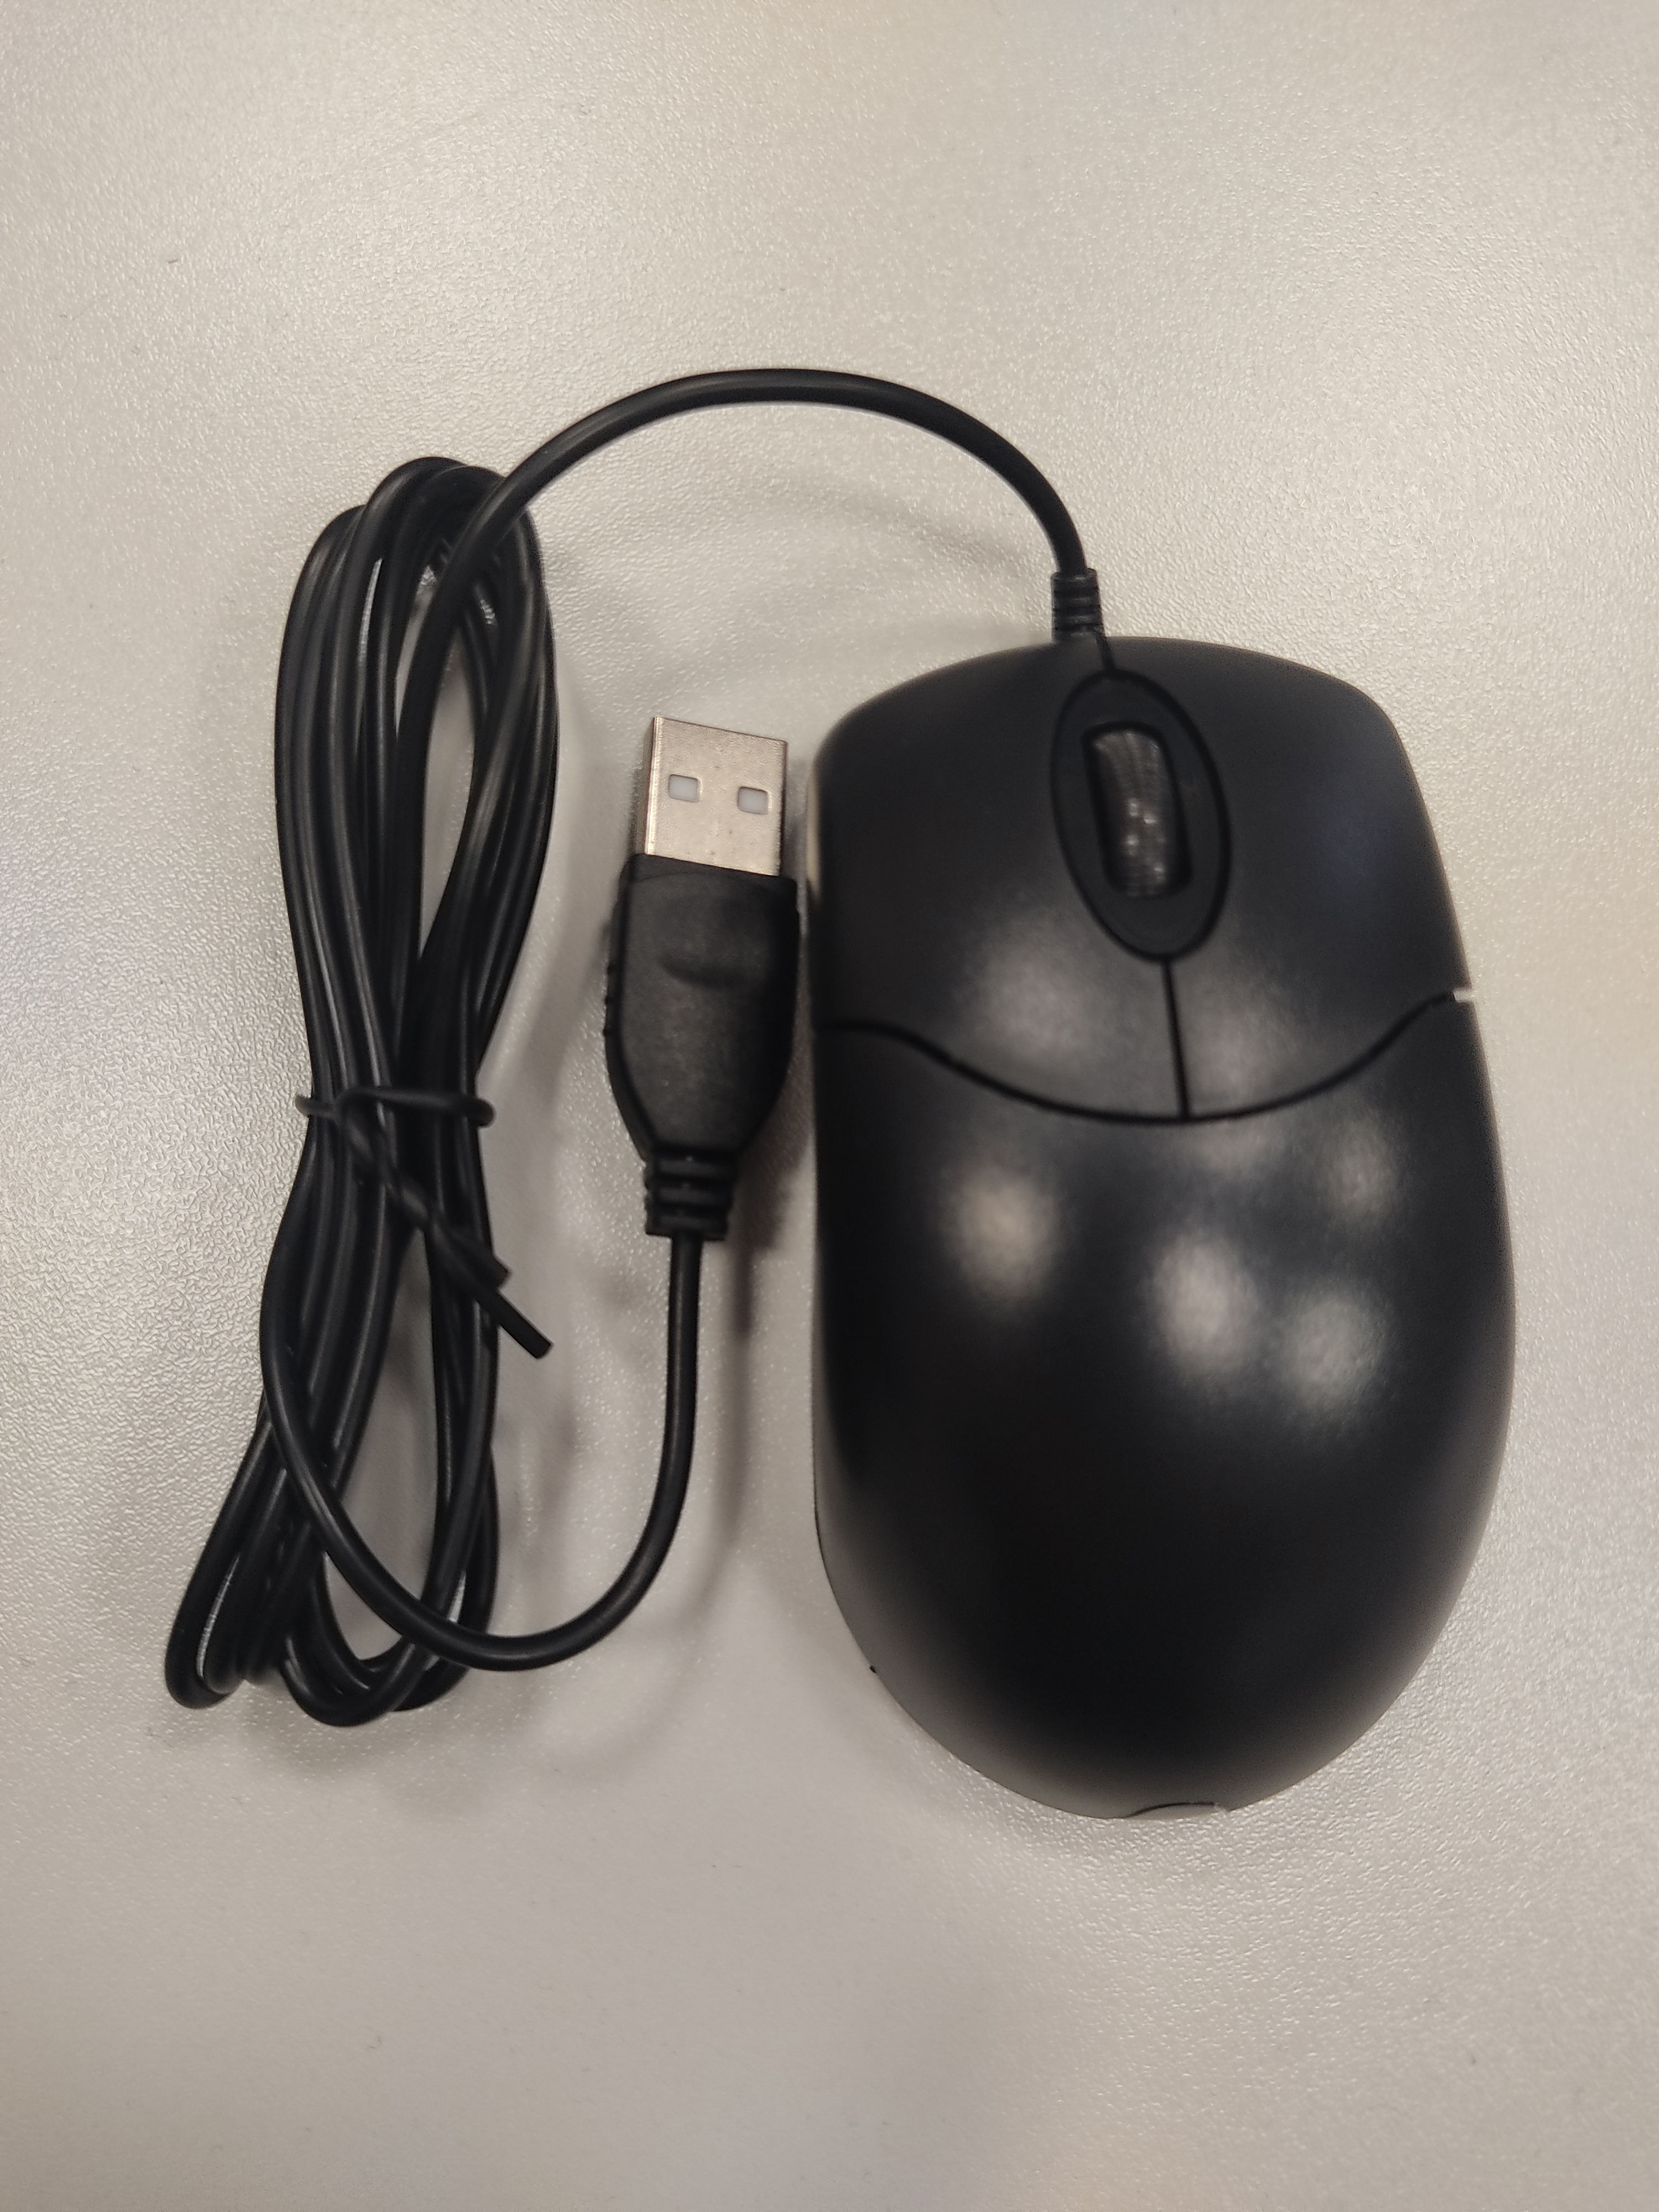 USB Maus optisch für NVR DVR HVCR Digital Rekorder